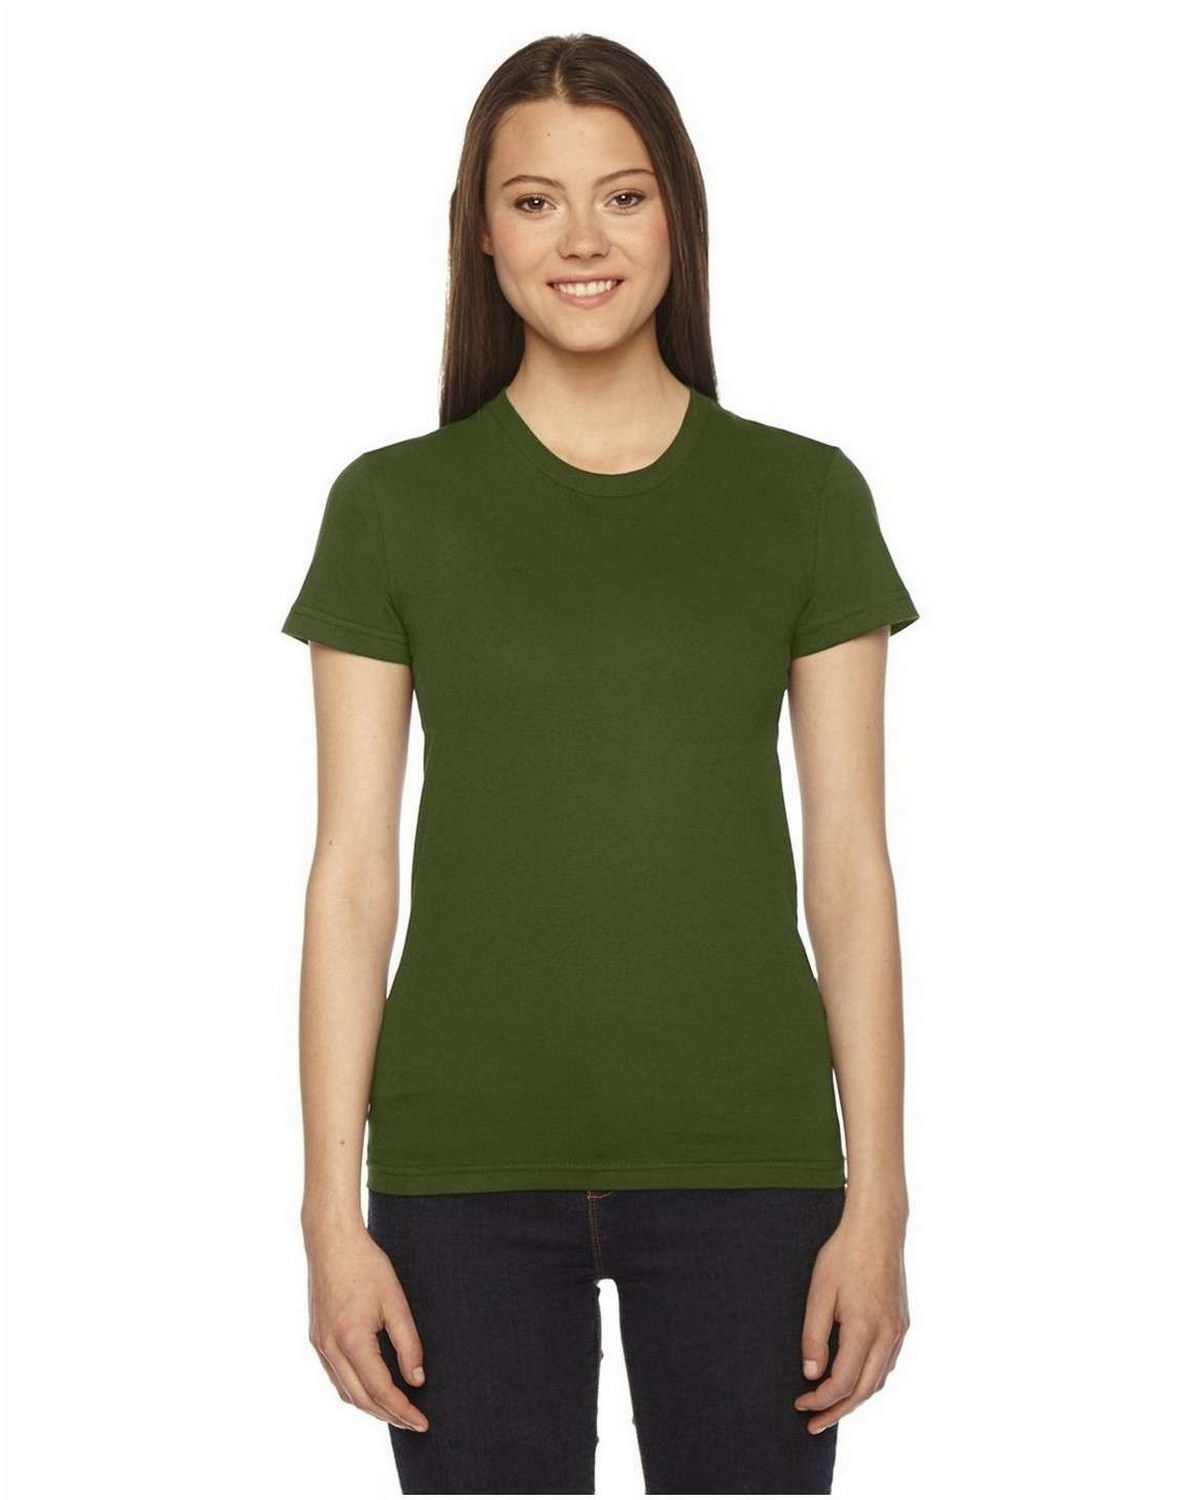 American Apparel 2102 Ladies Fine Jersey Short-Sleeve T-Shirt